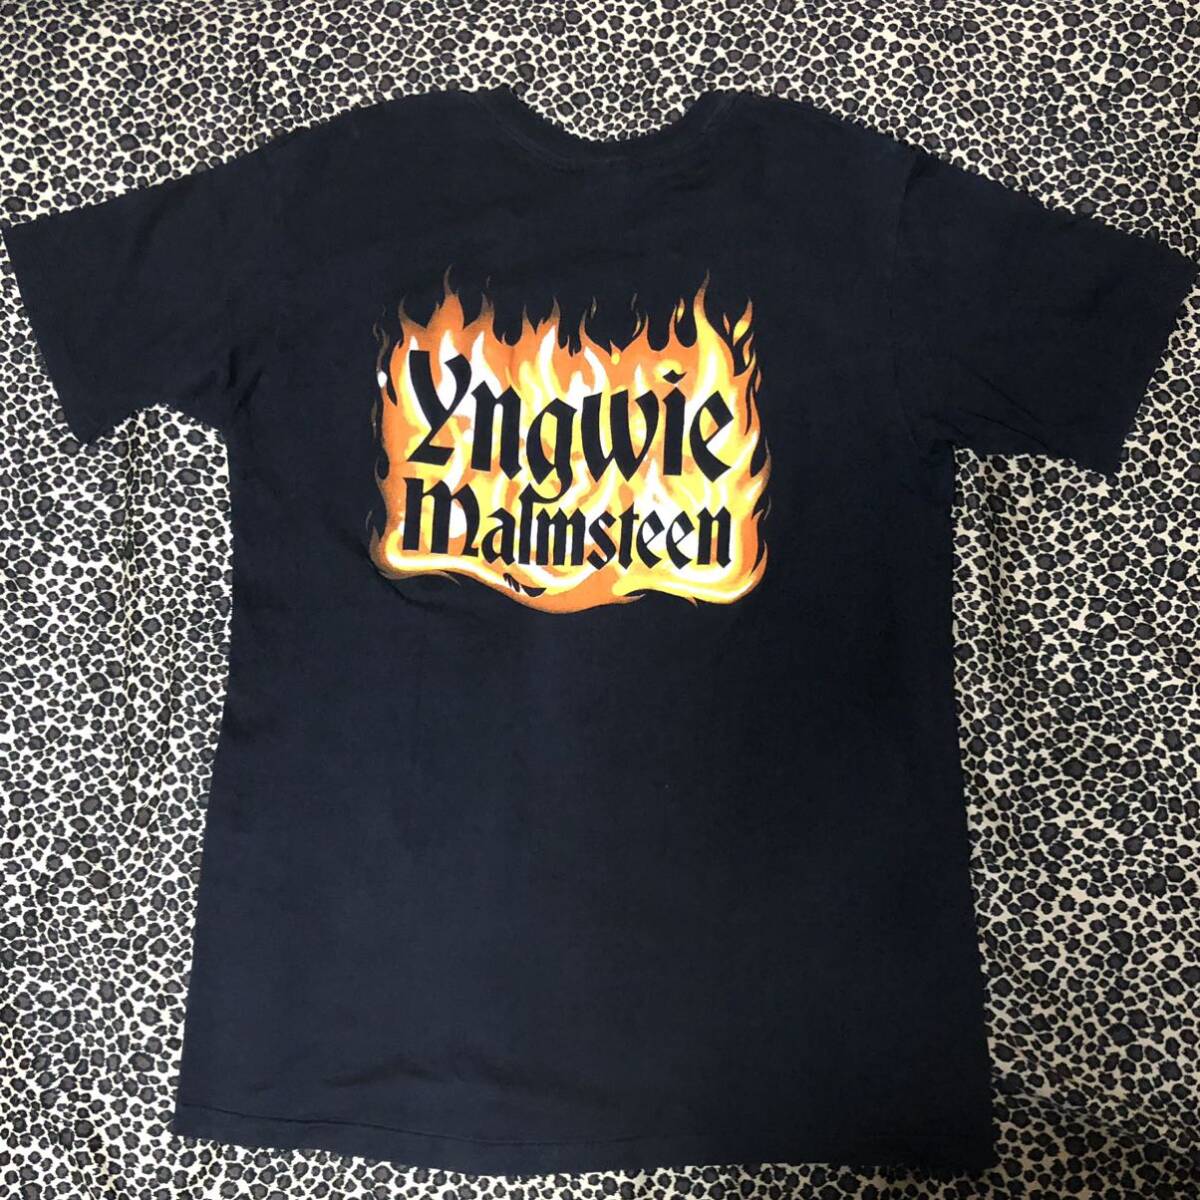 90's Yngwie Malmsteen Tシャツ L ブラック ヴィンテージ 90年代 vintage tee